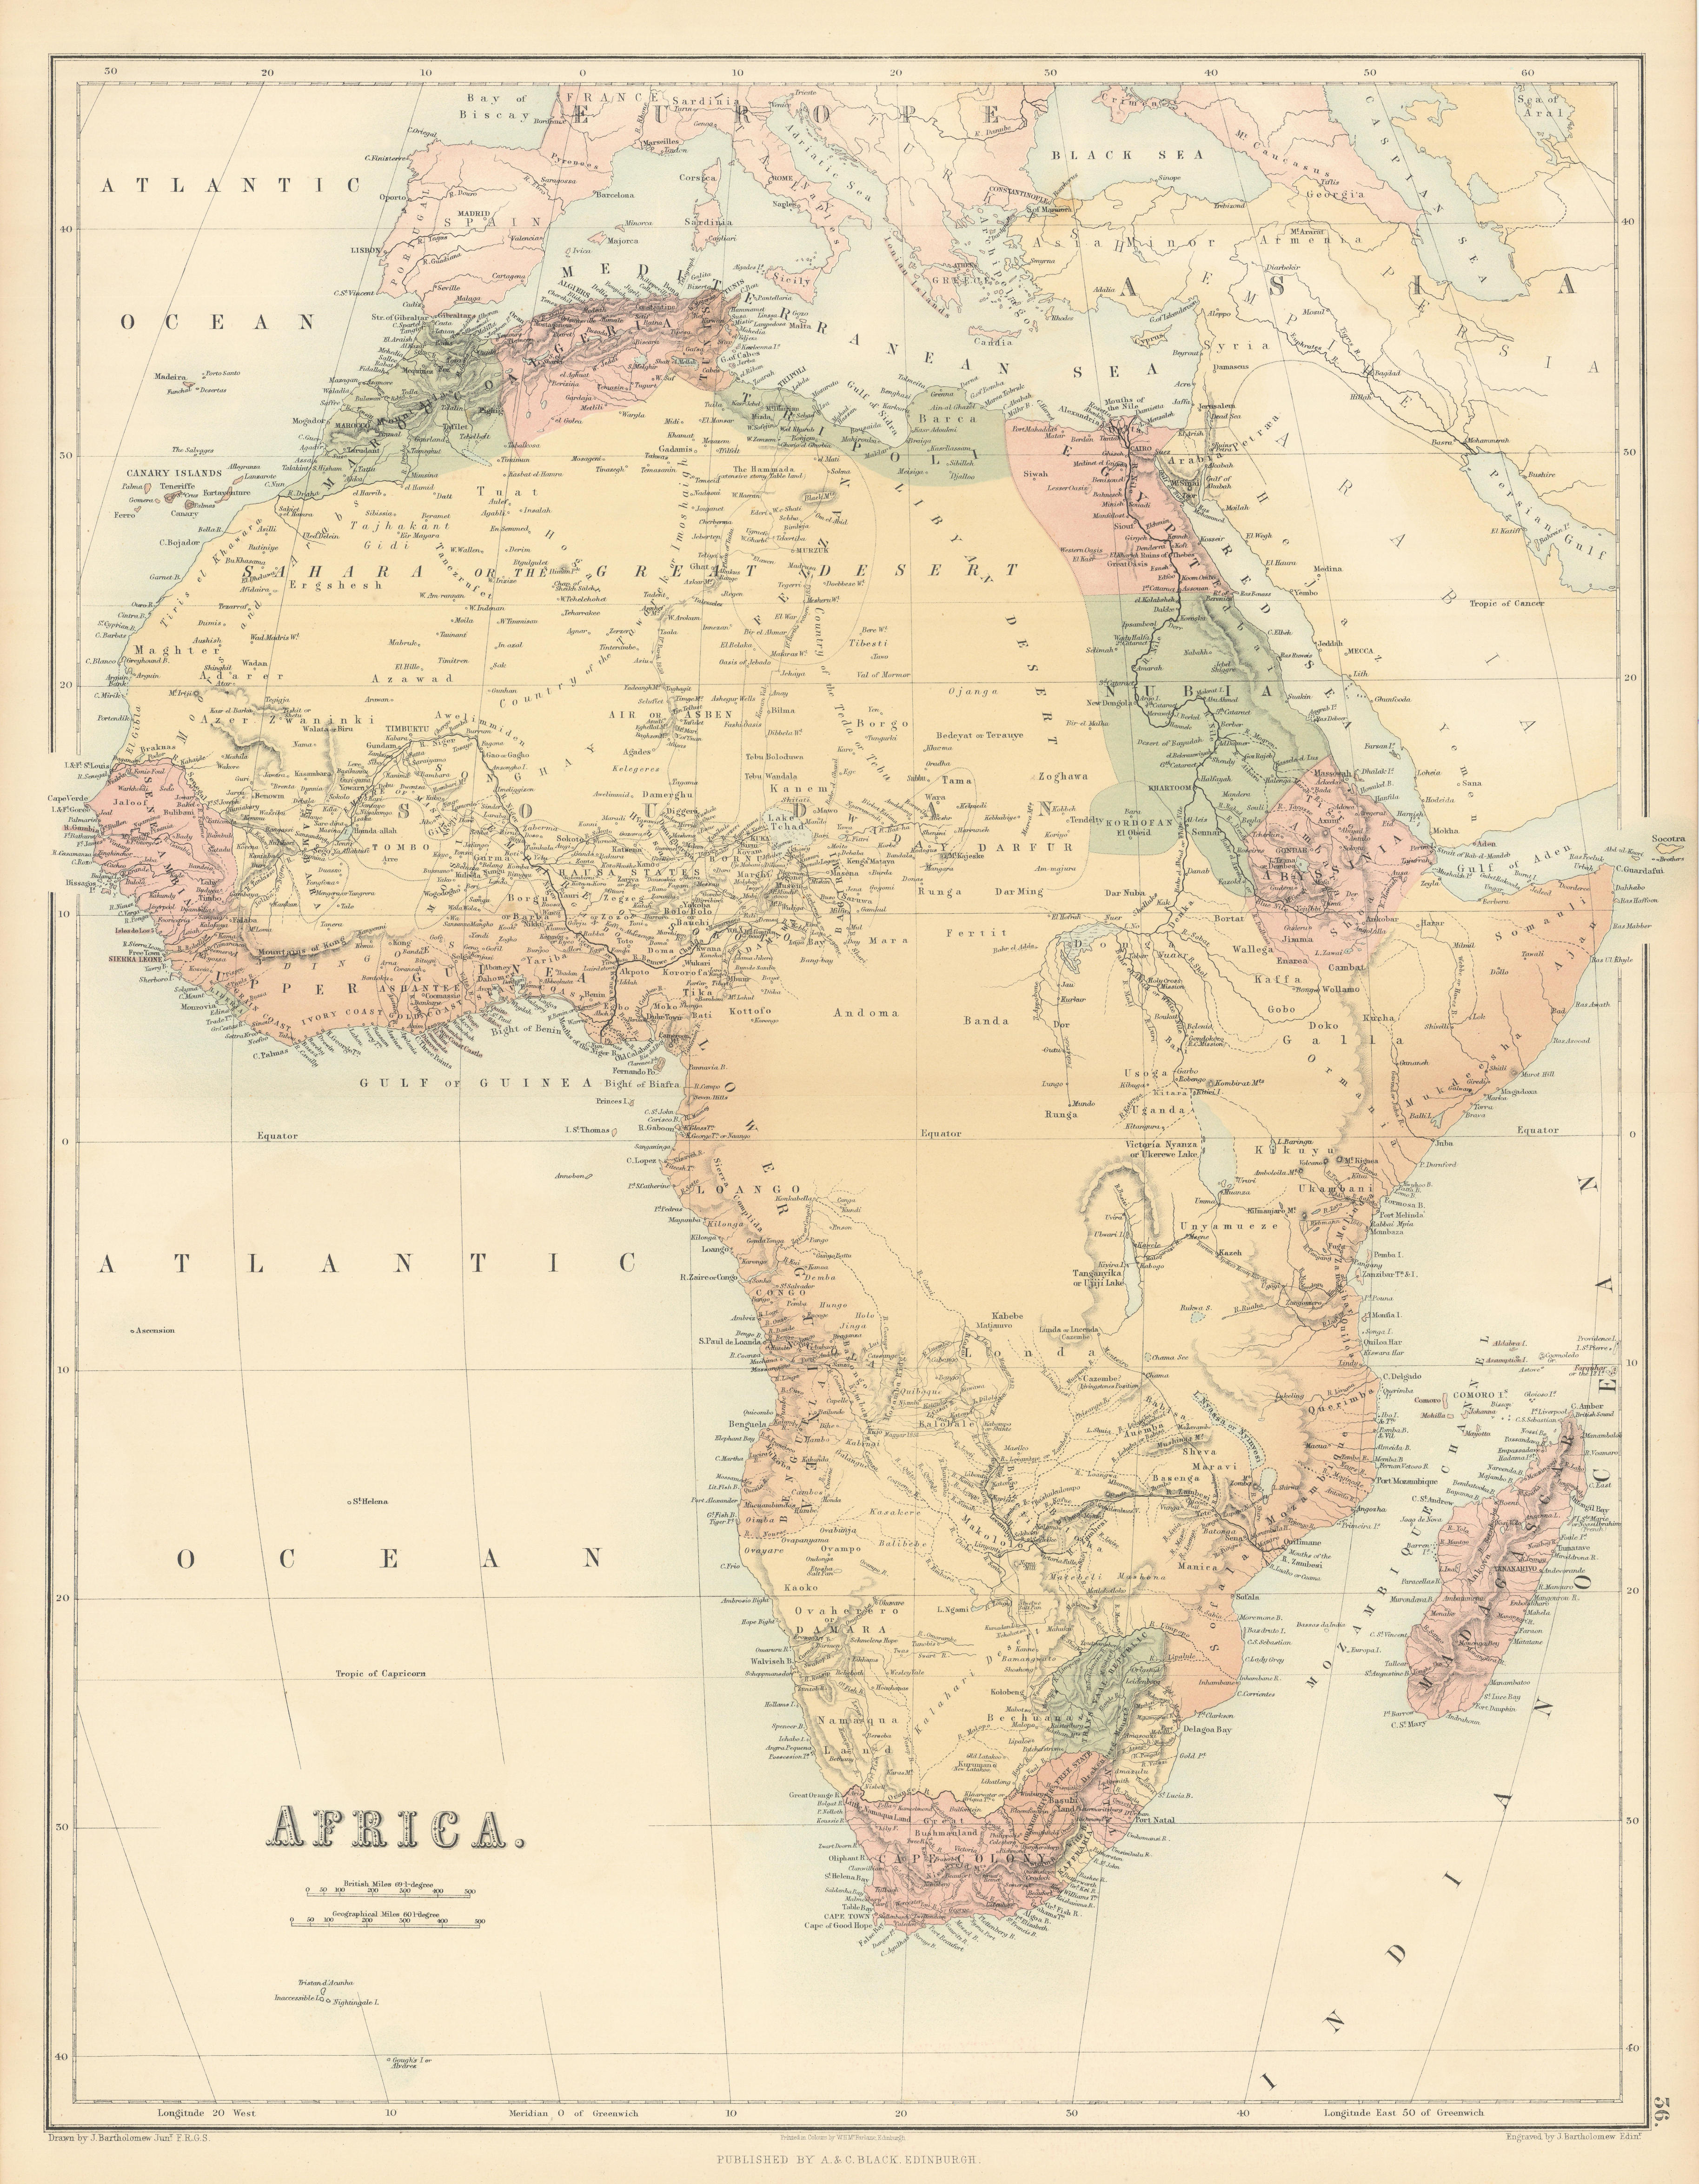 Africa. Tribes/pre-European Kingdoms. Great Lakes & Nile. BARTHOLOMEW 1862 map